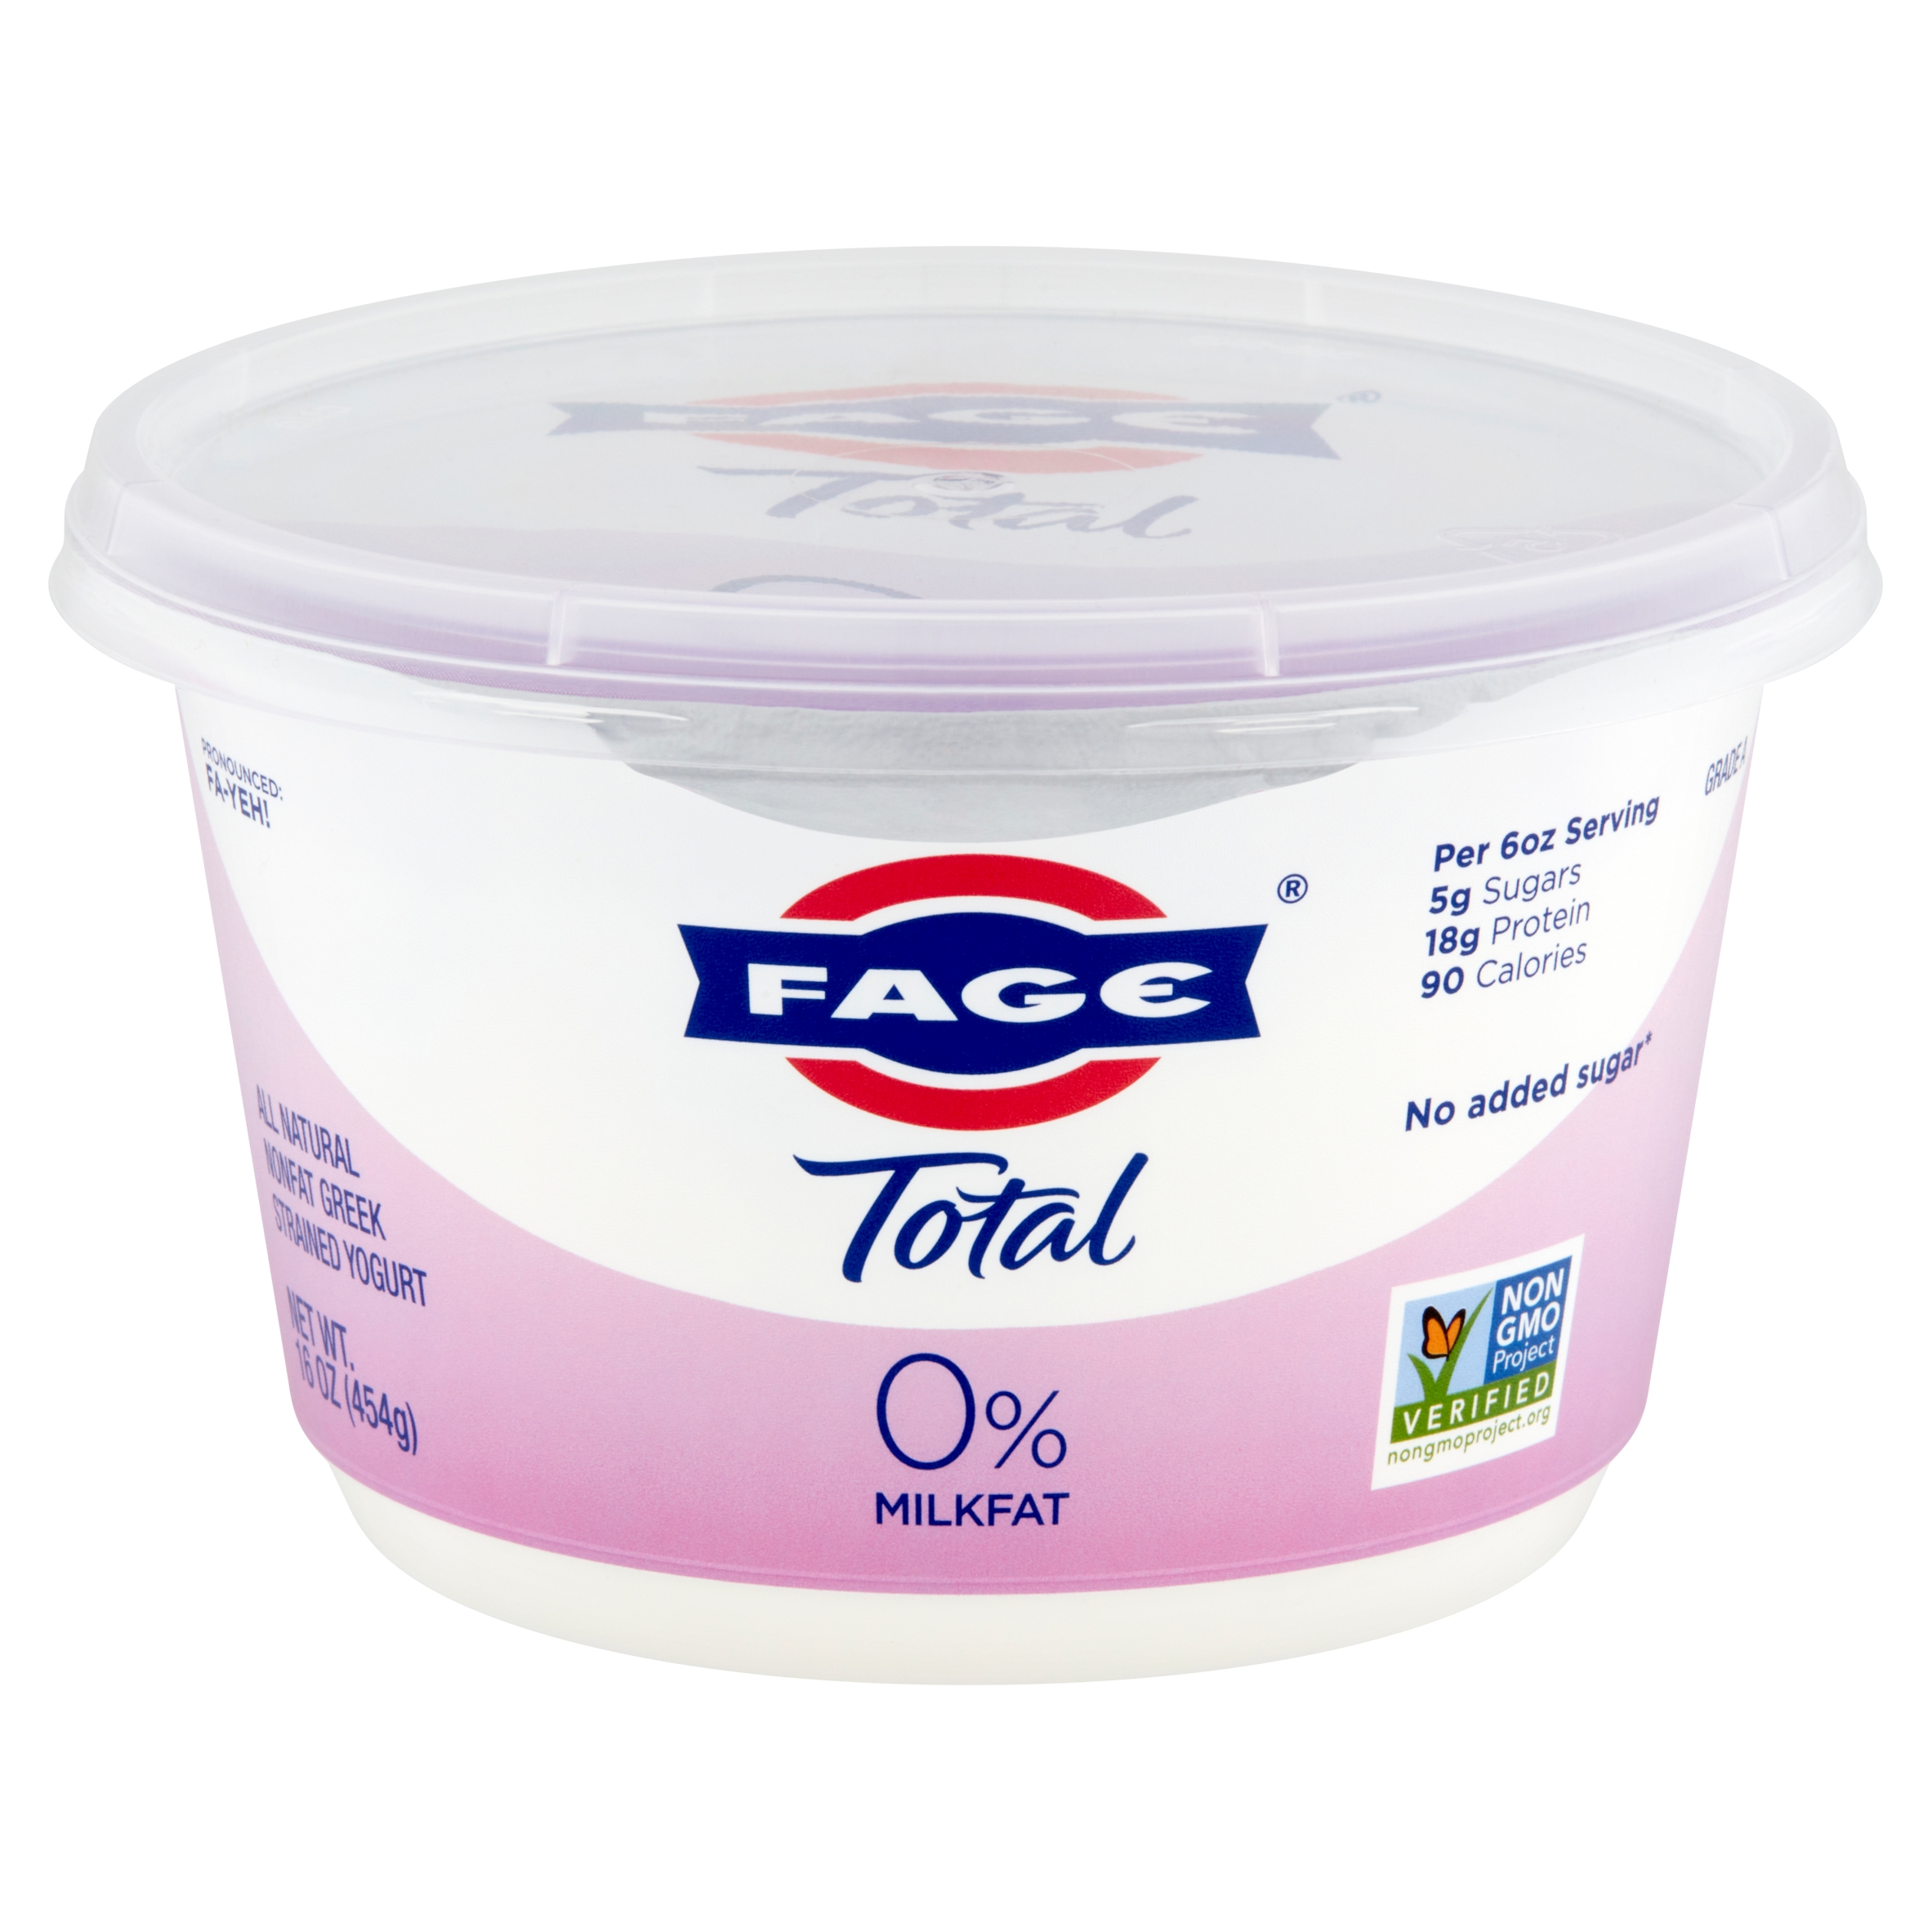 FAGE Total All Natural Nonfat Plain Greek Strained Yogurt, 16 oz - image 1 of 7